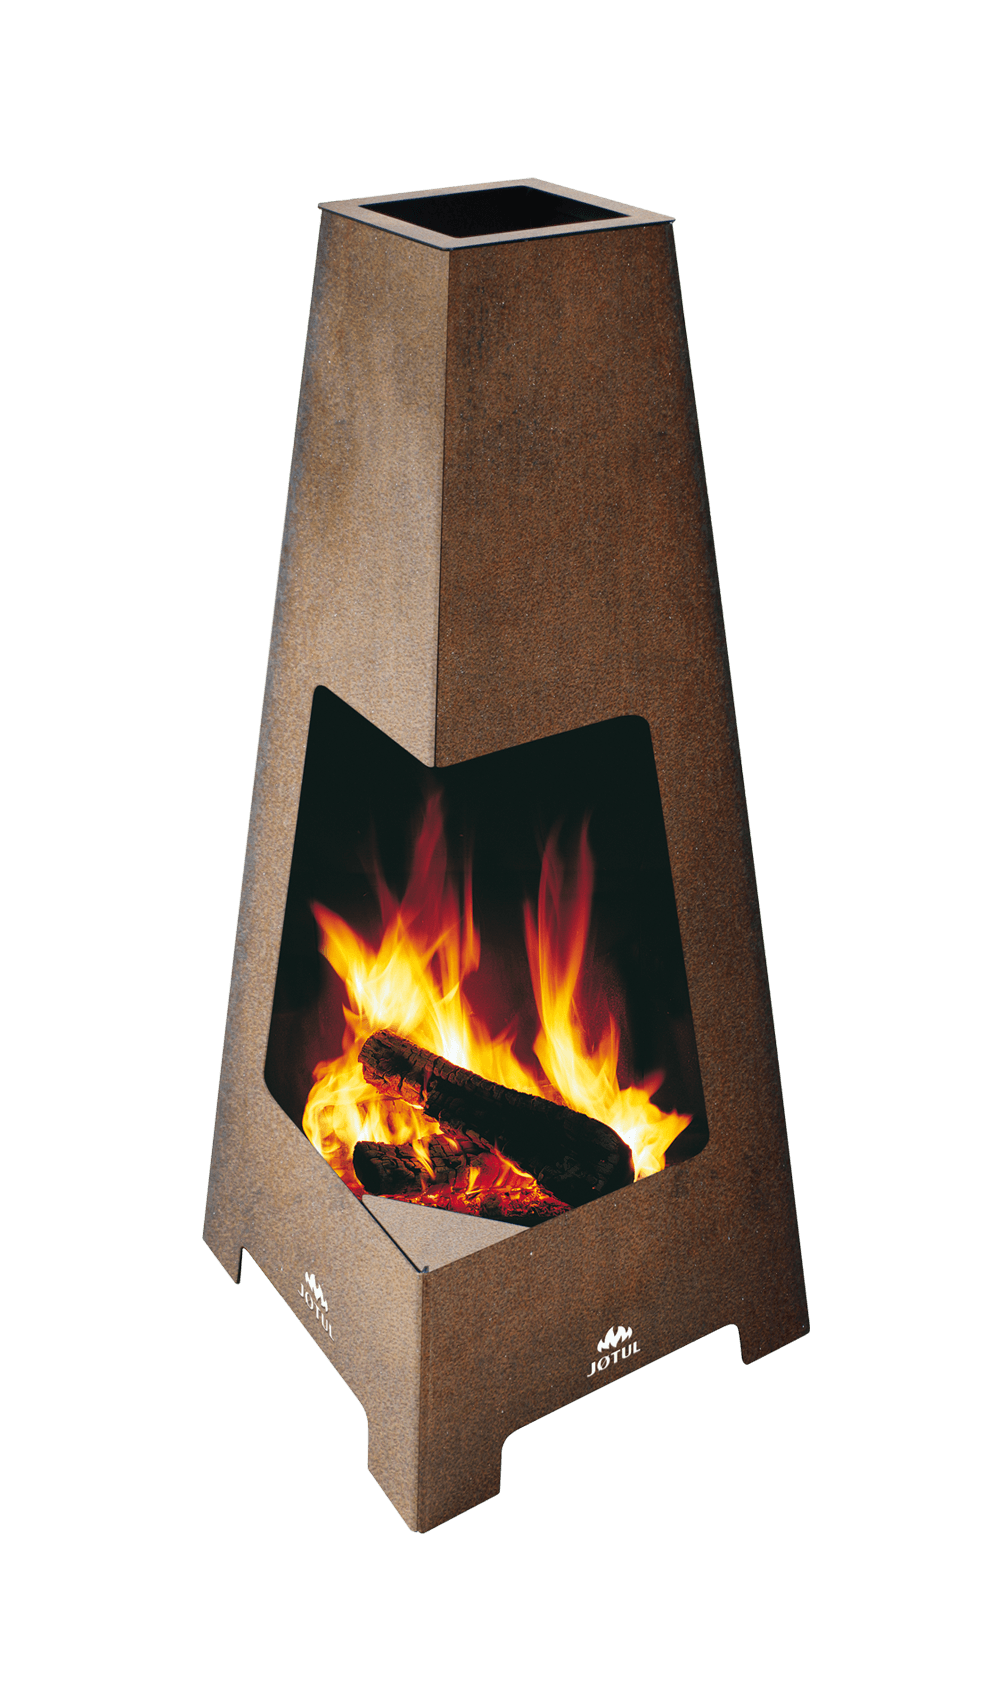 Jøtul Terrazza Outdoor Wood Fireplace